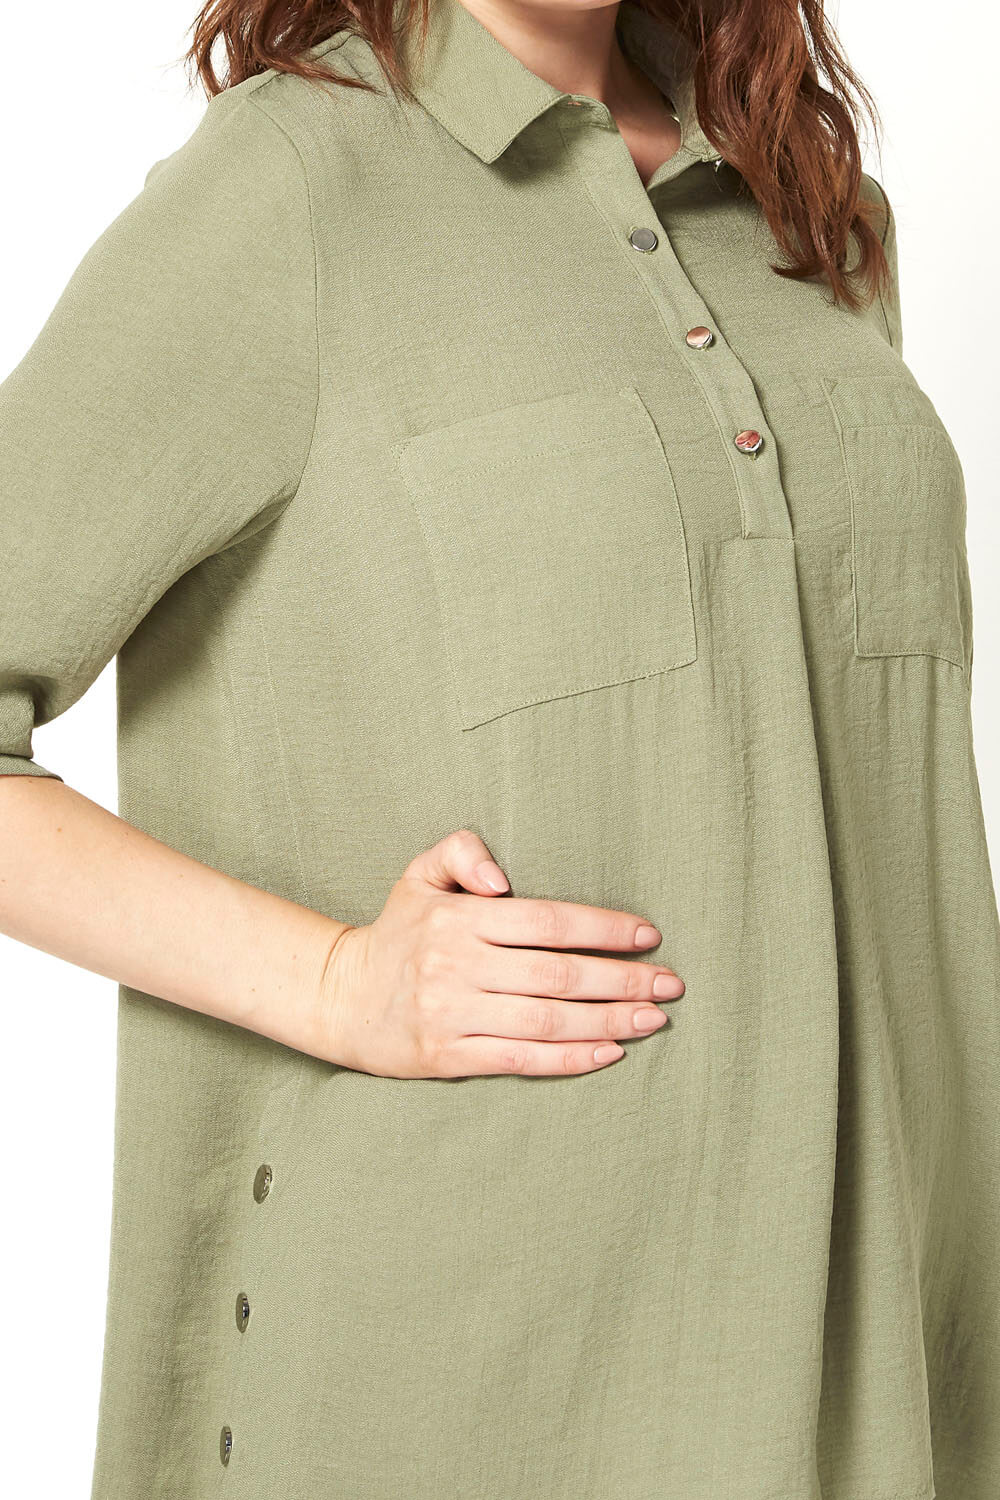 KHAKI Button and Pocket Detail Shirt, Image 4 of 5